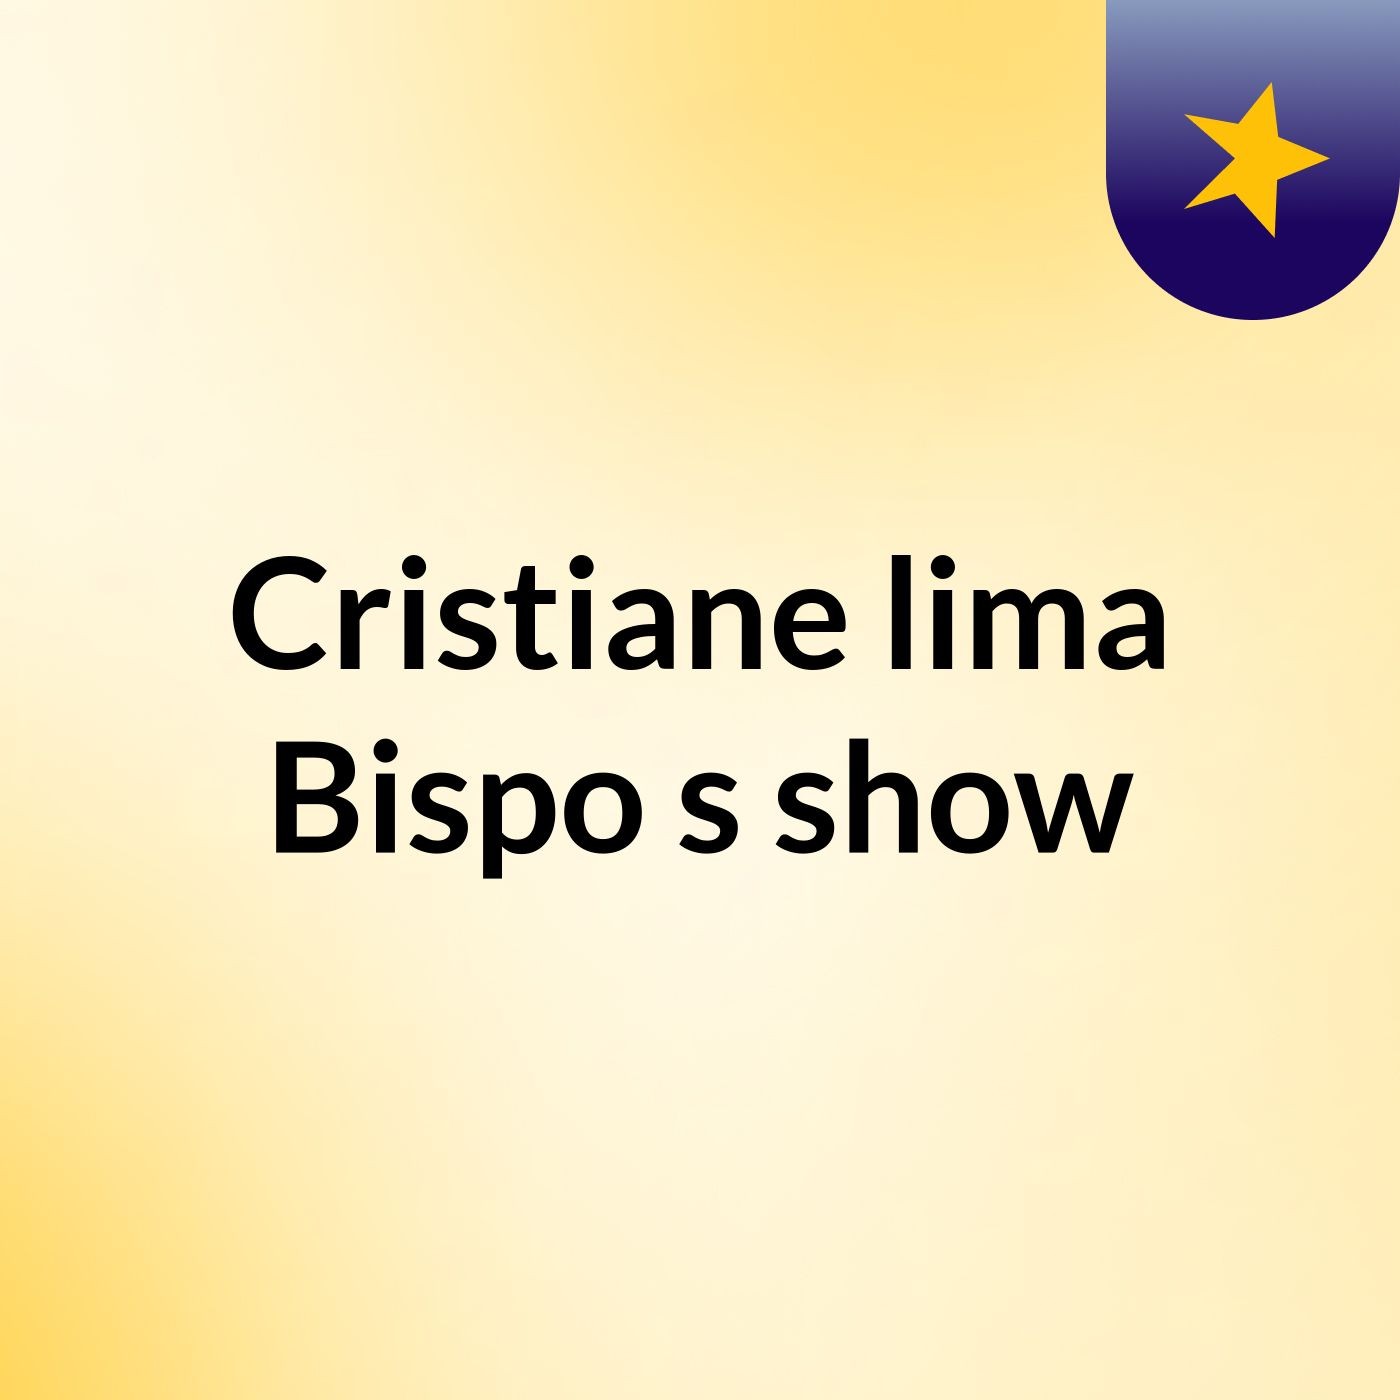 Cristiane lima Bispo's show